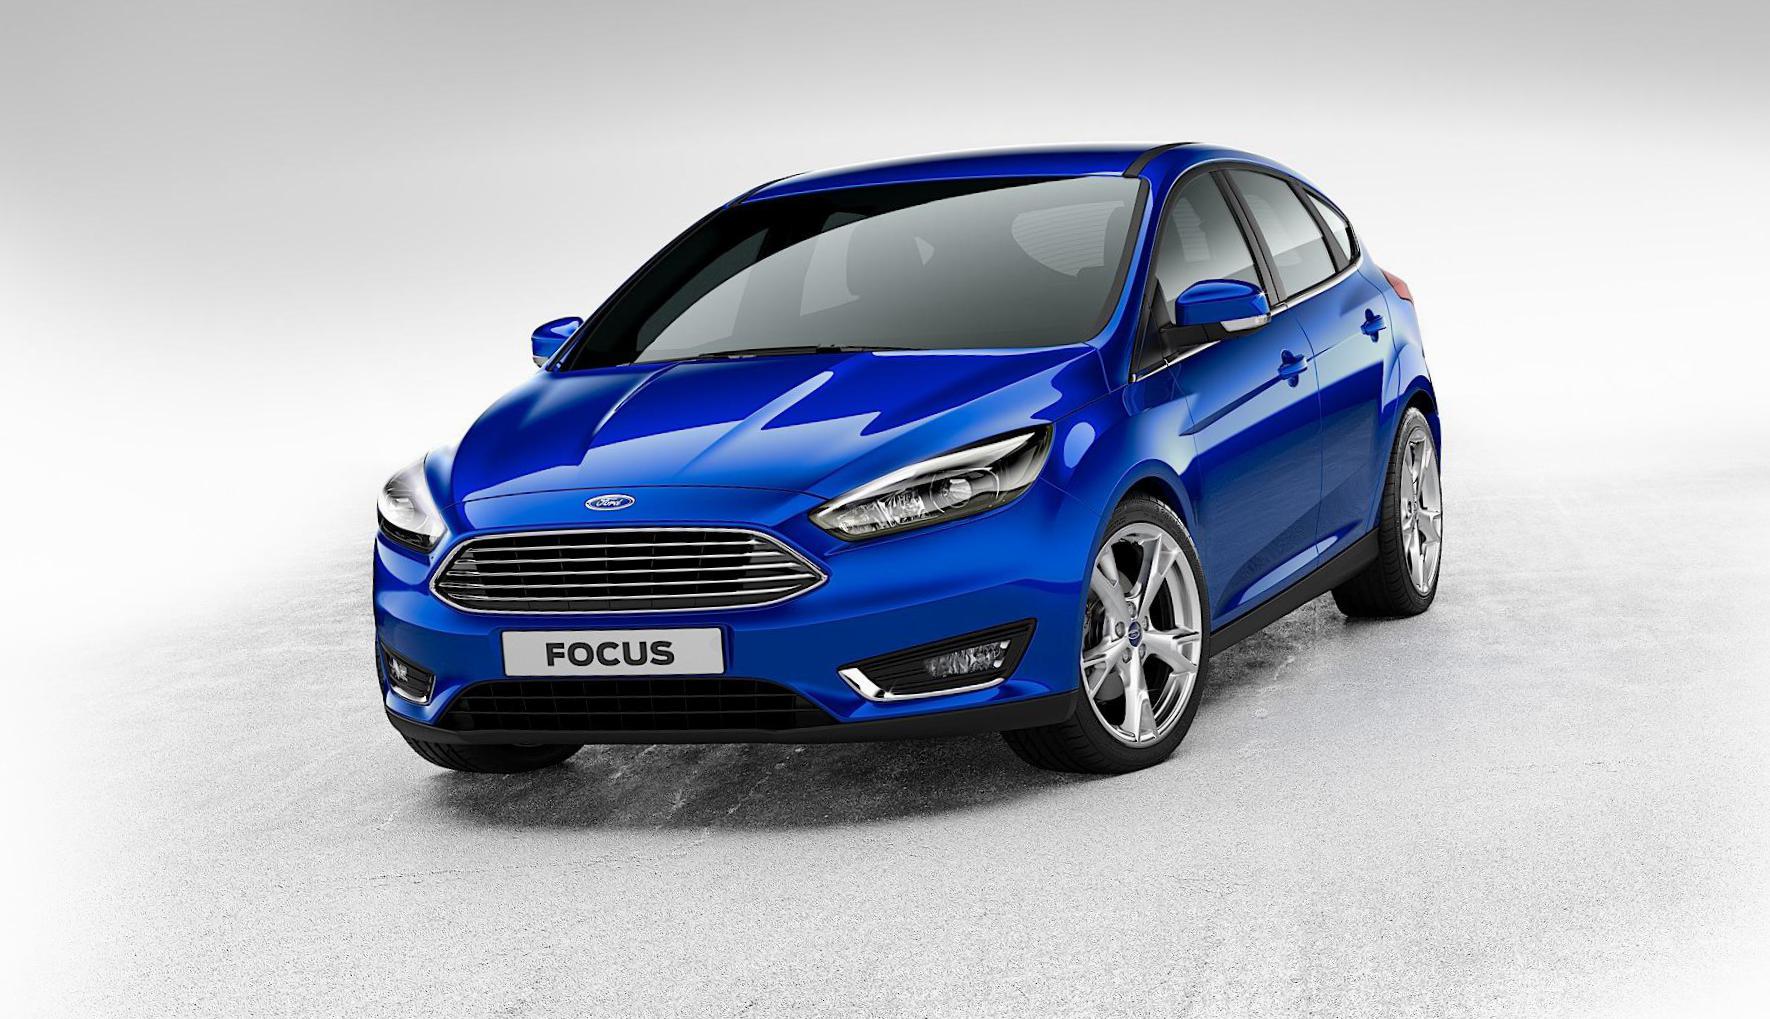 Ford Focus 5 doors prices hatchback